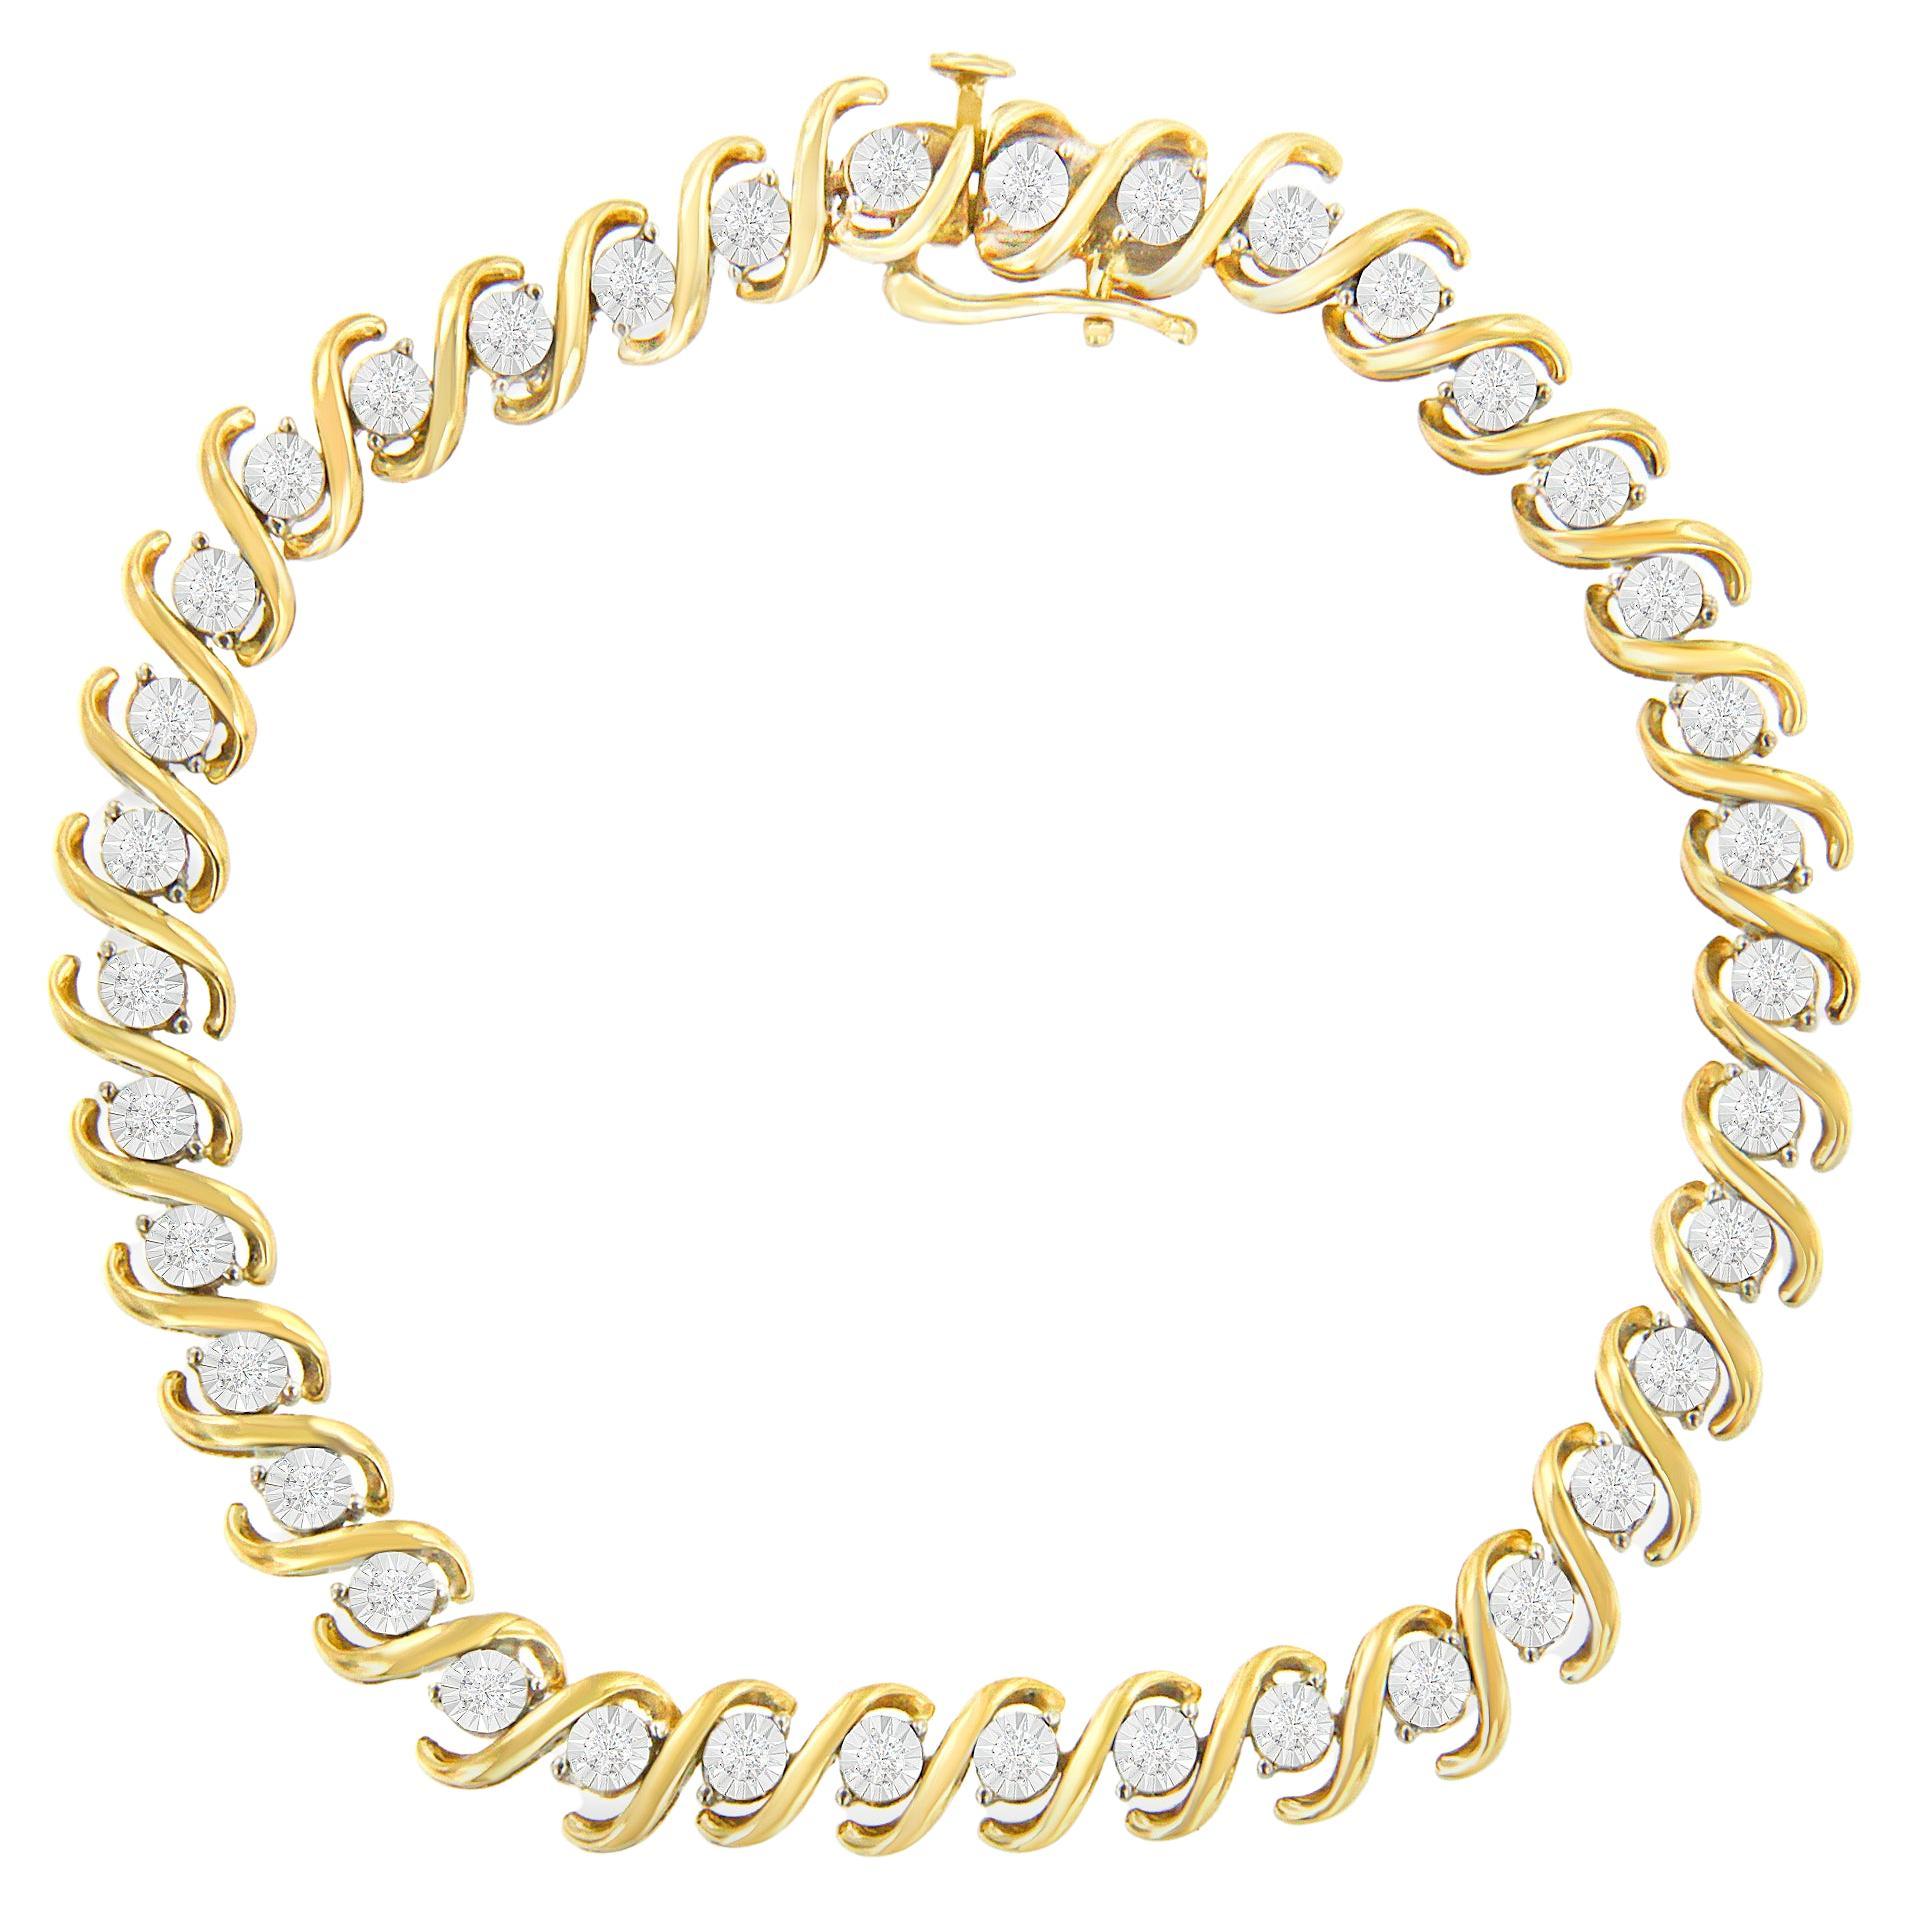 10K Yellow Gold Plated Sterling Silver Round-Cut 0.5 Carat Diamond Bracelet